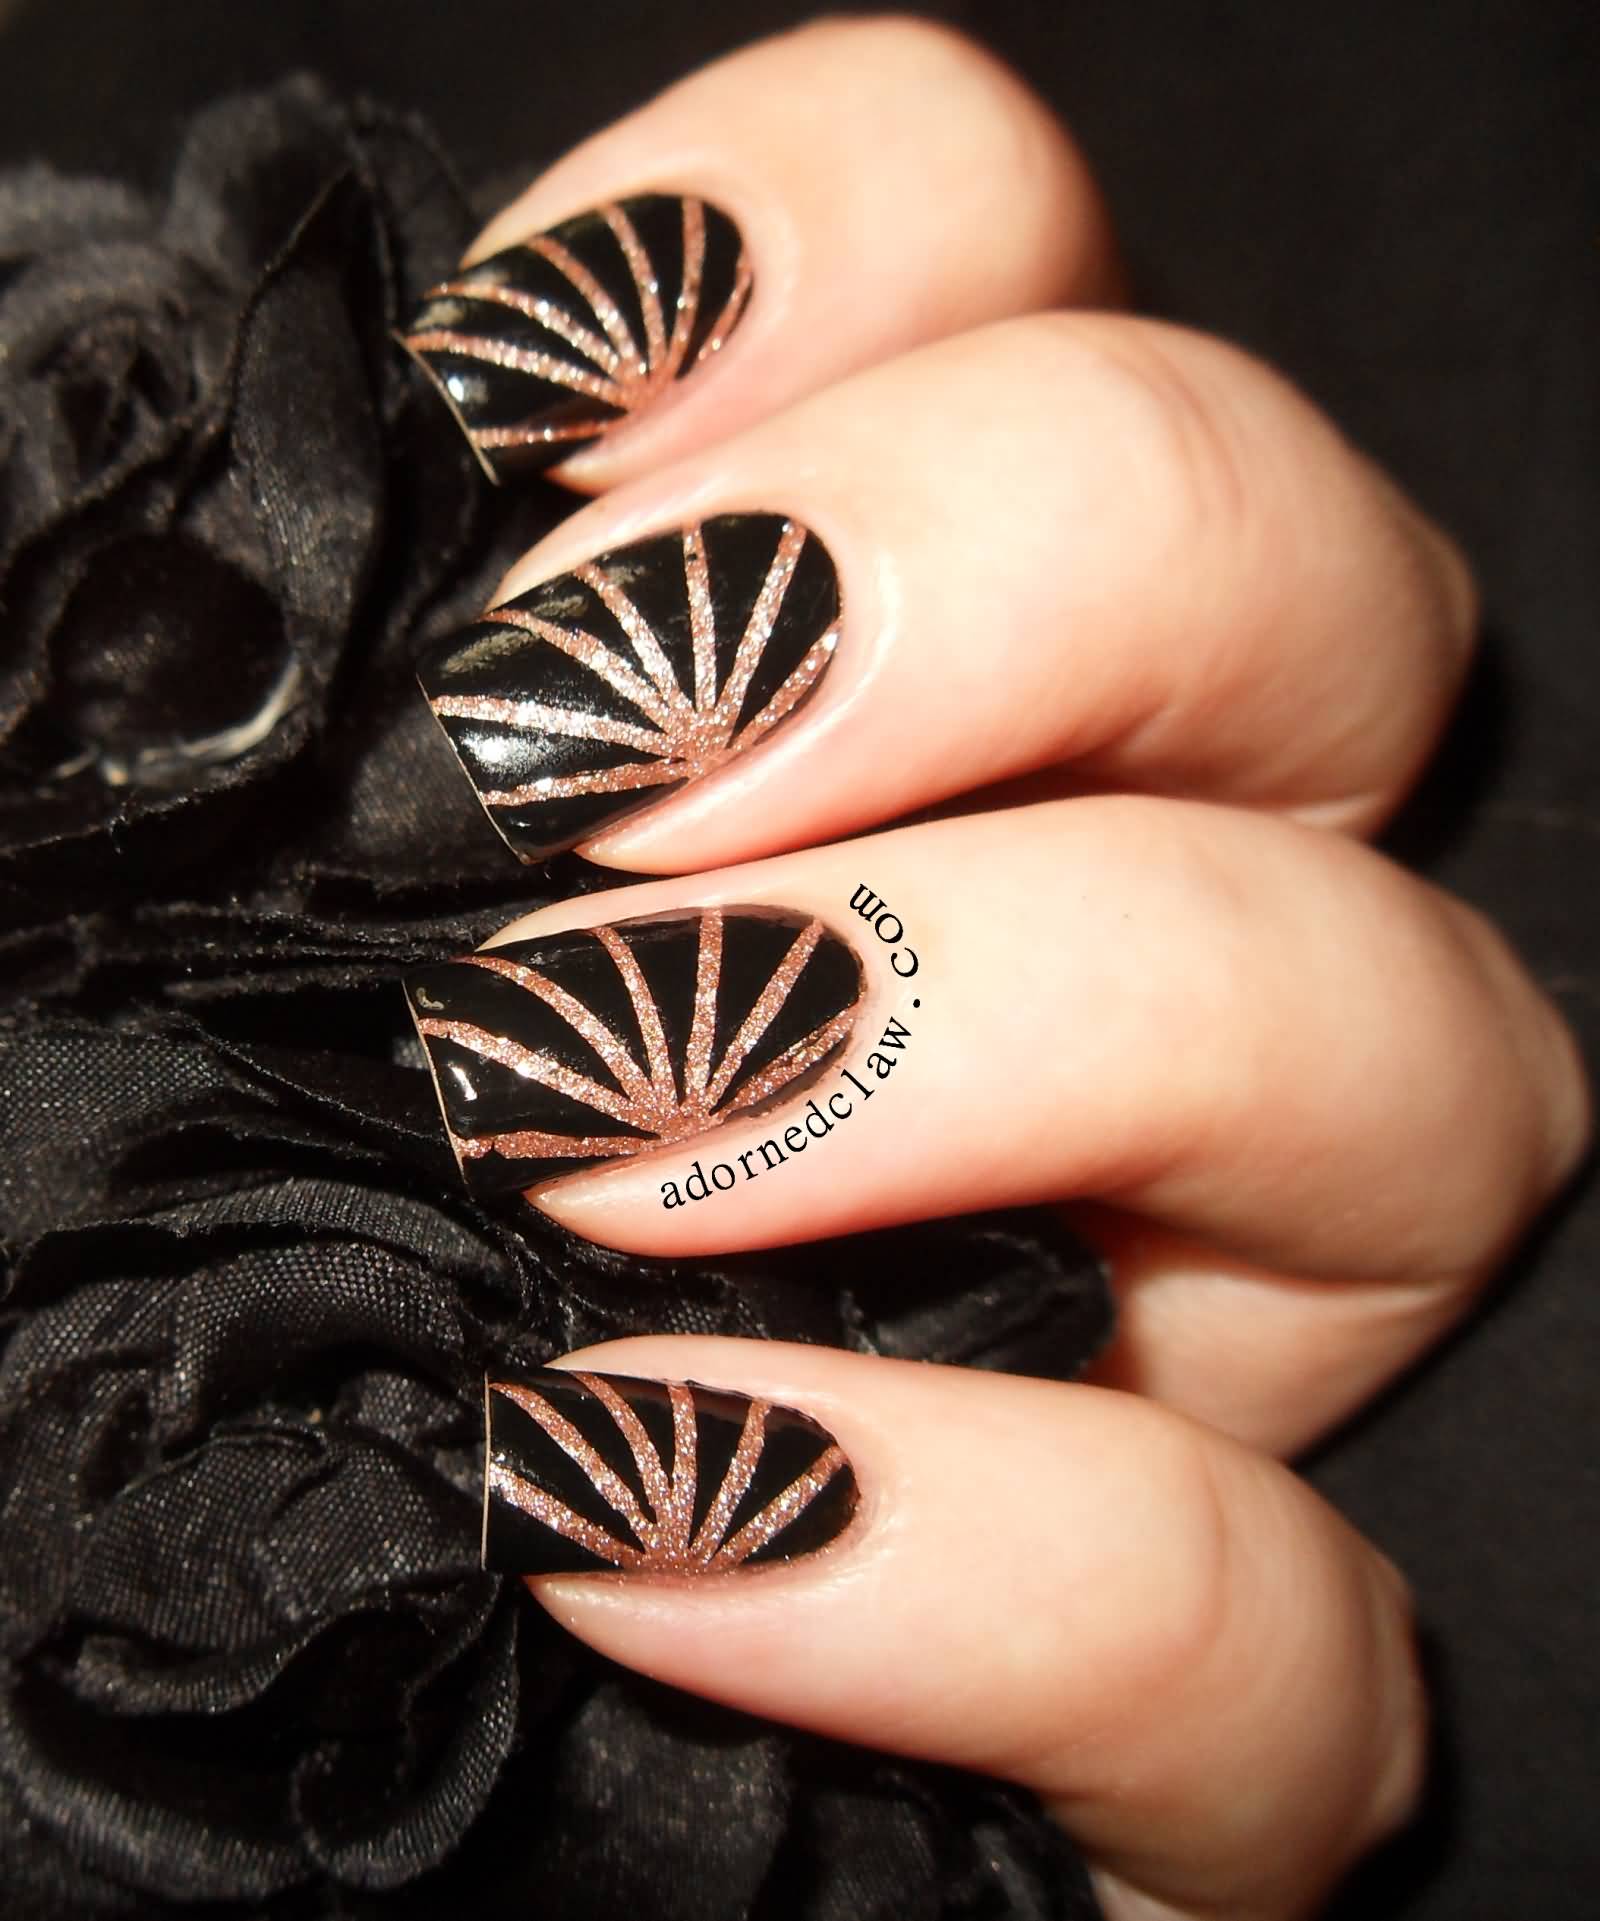 Black Nails With Glitter Stripes Nail Art